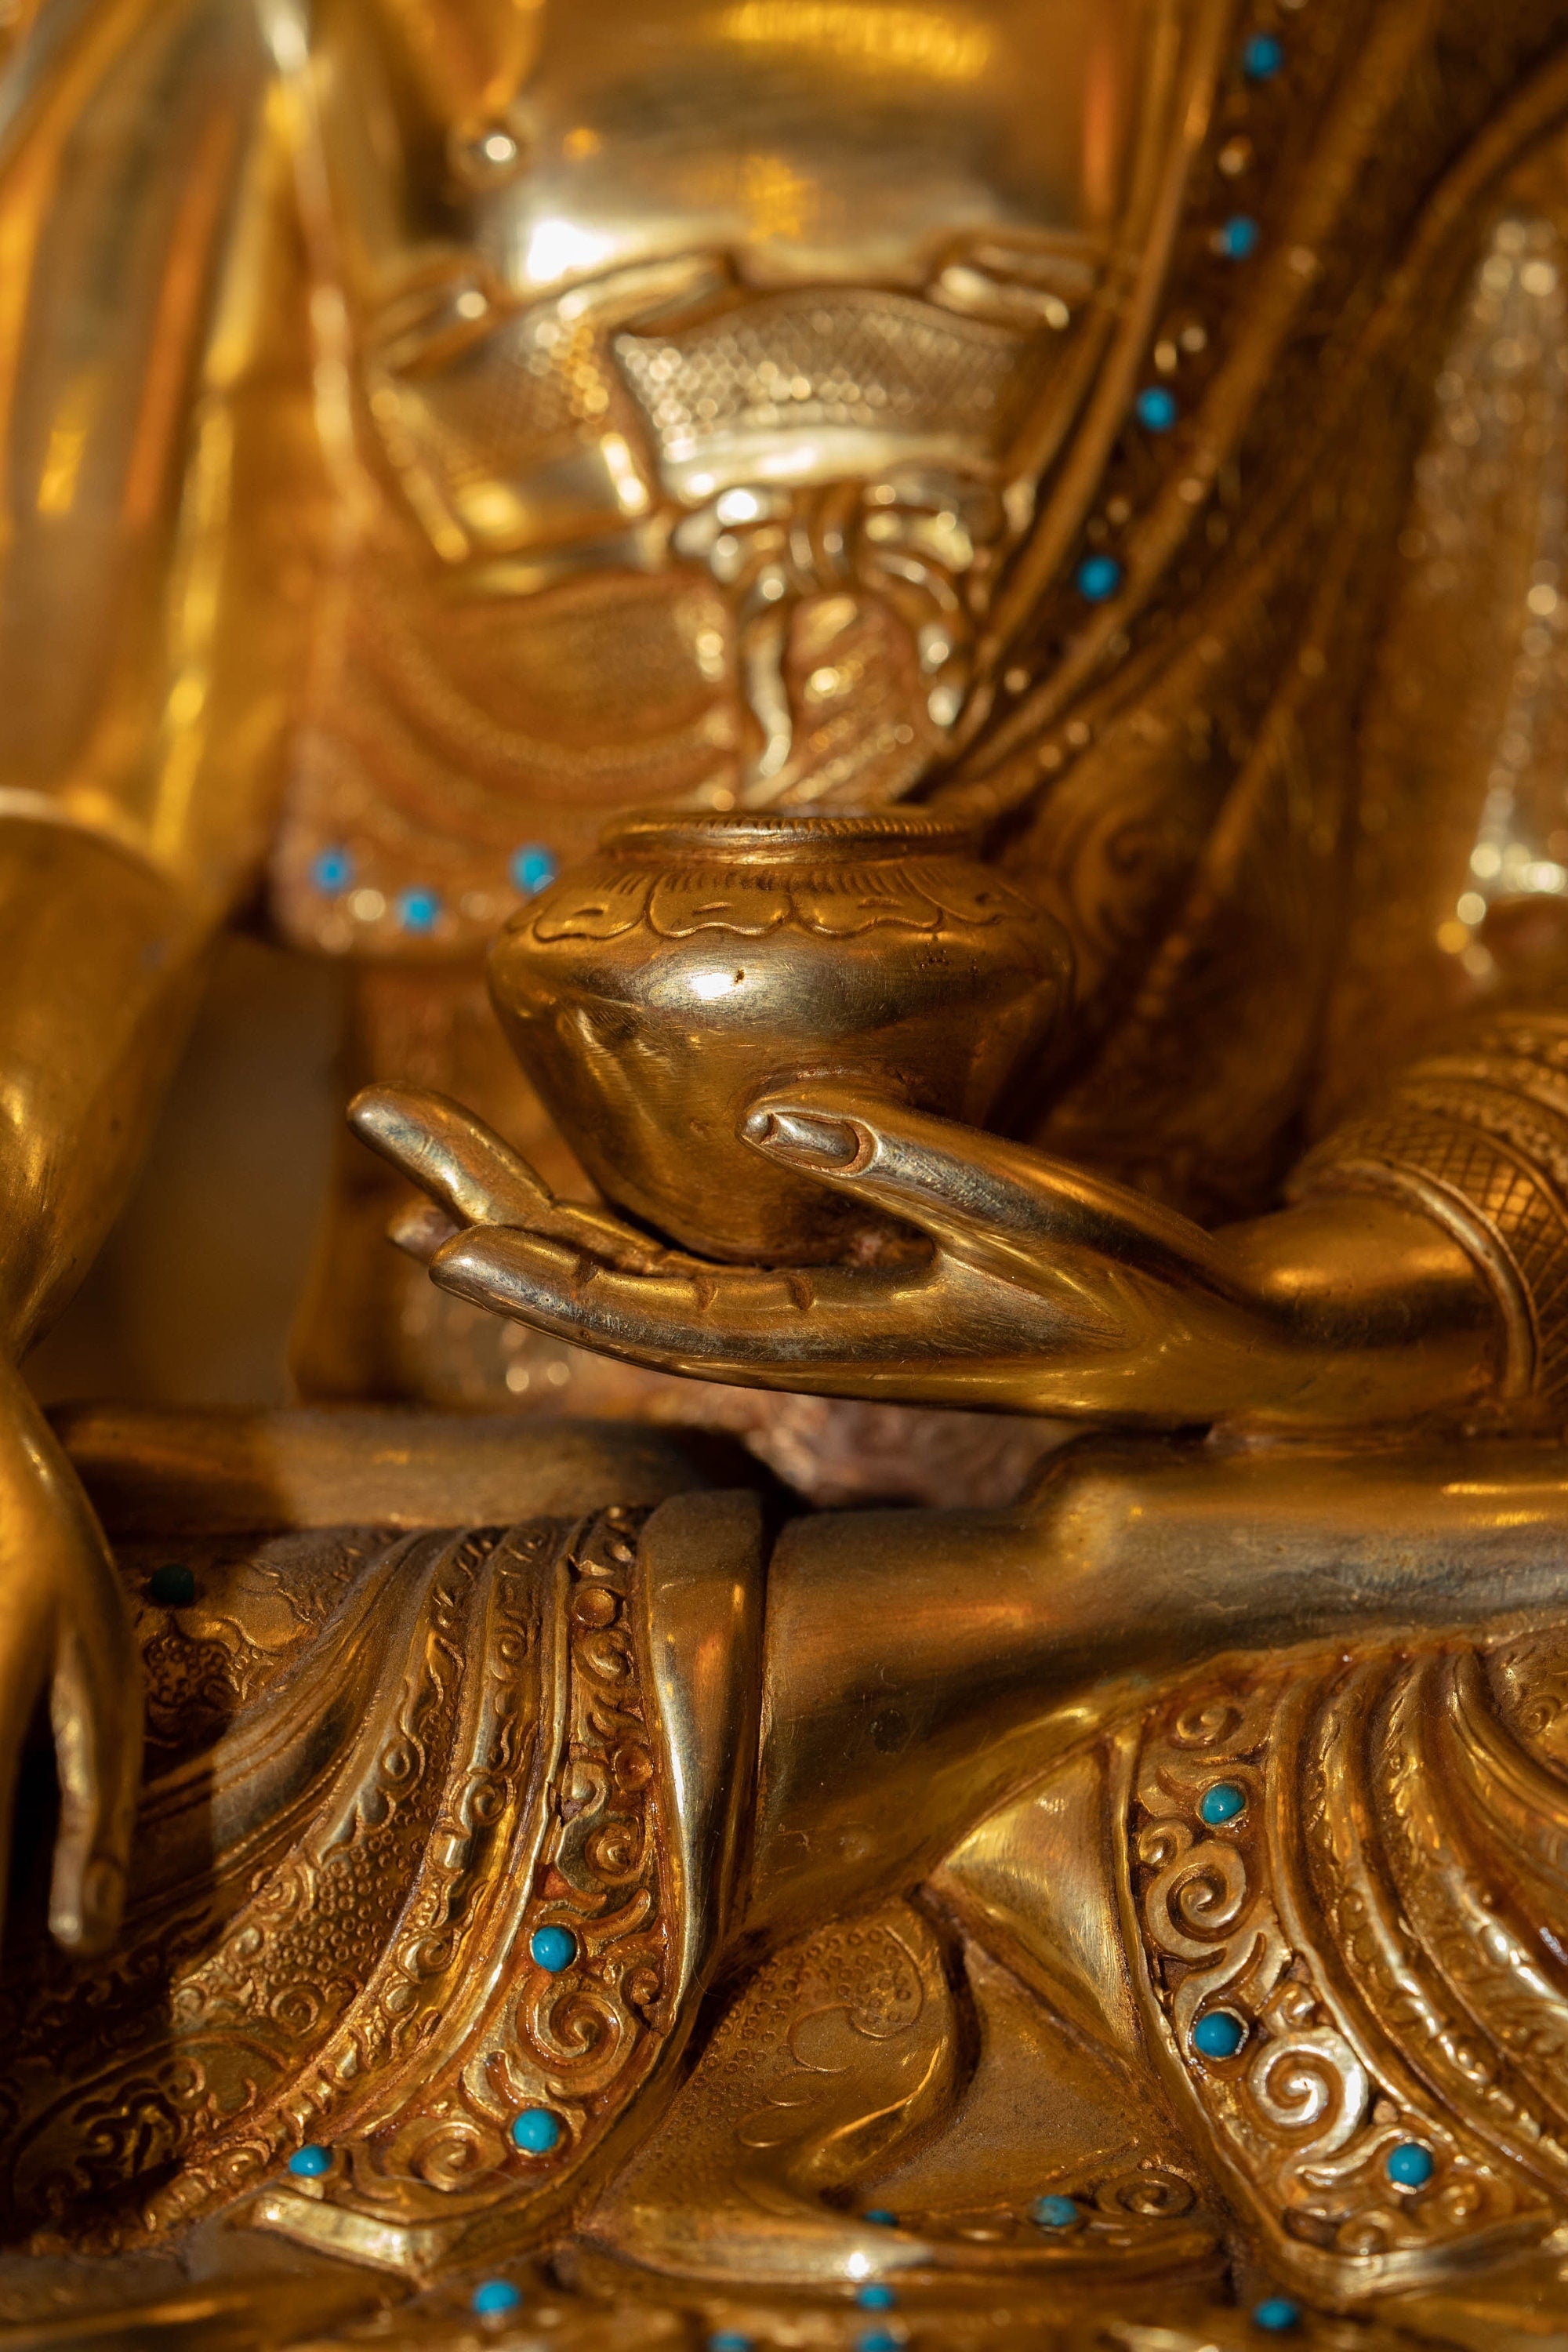 Handcrafted Shakyamuni Buddha statue - Lucky Thanka